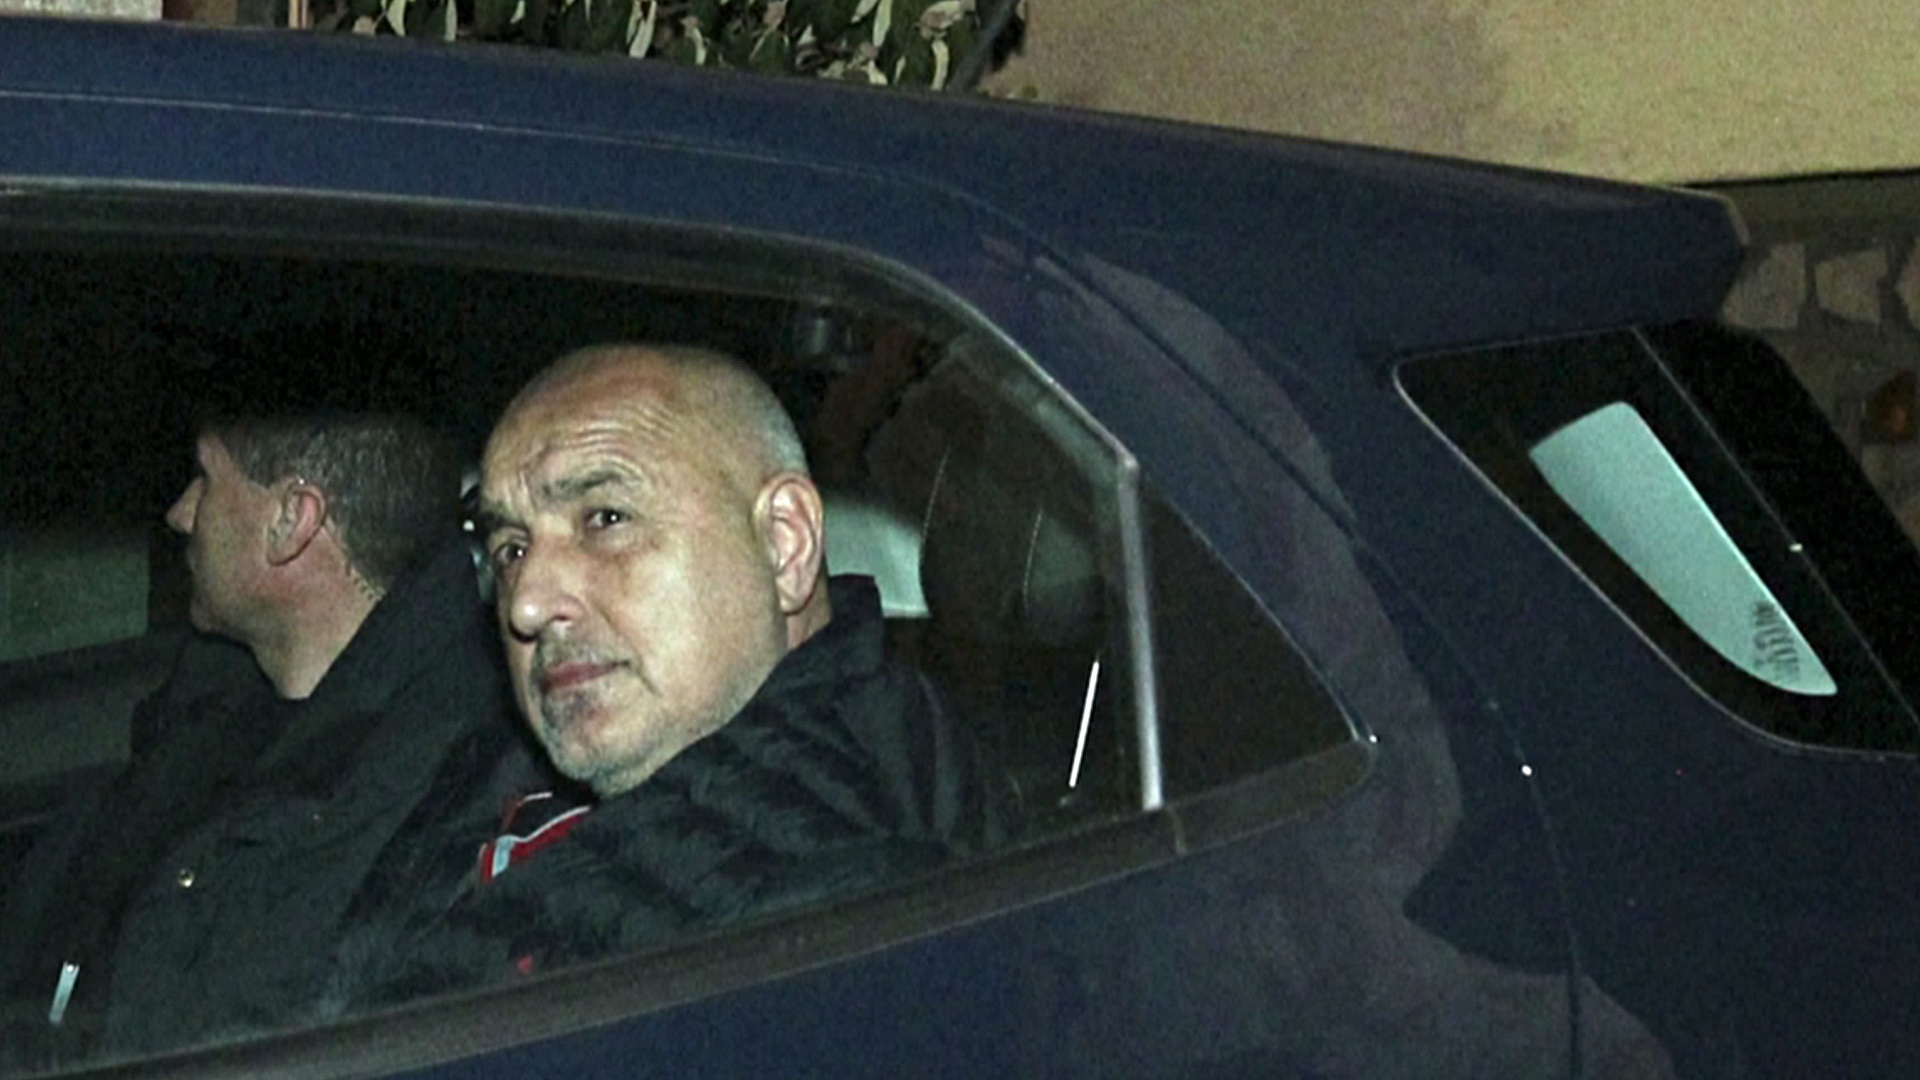 Арестован экс-премьер Болгарии